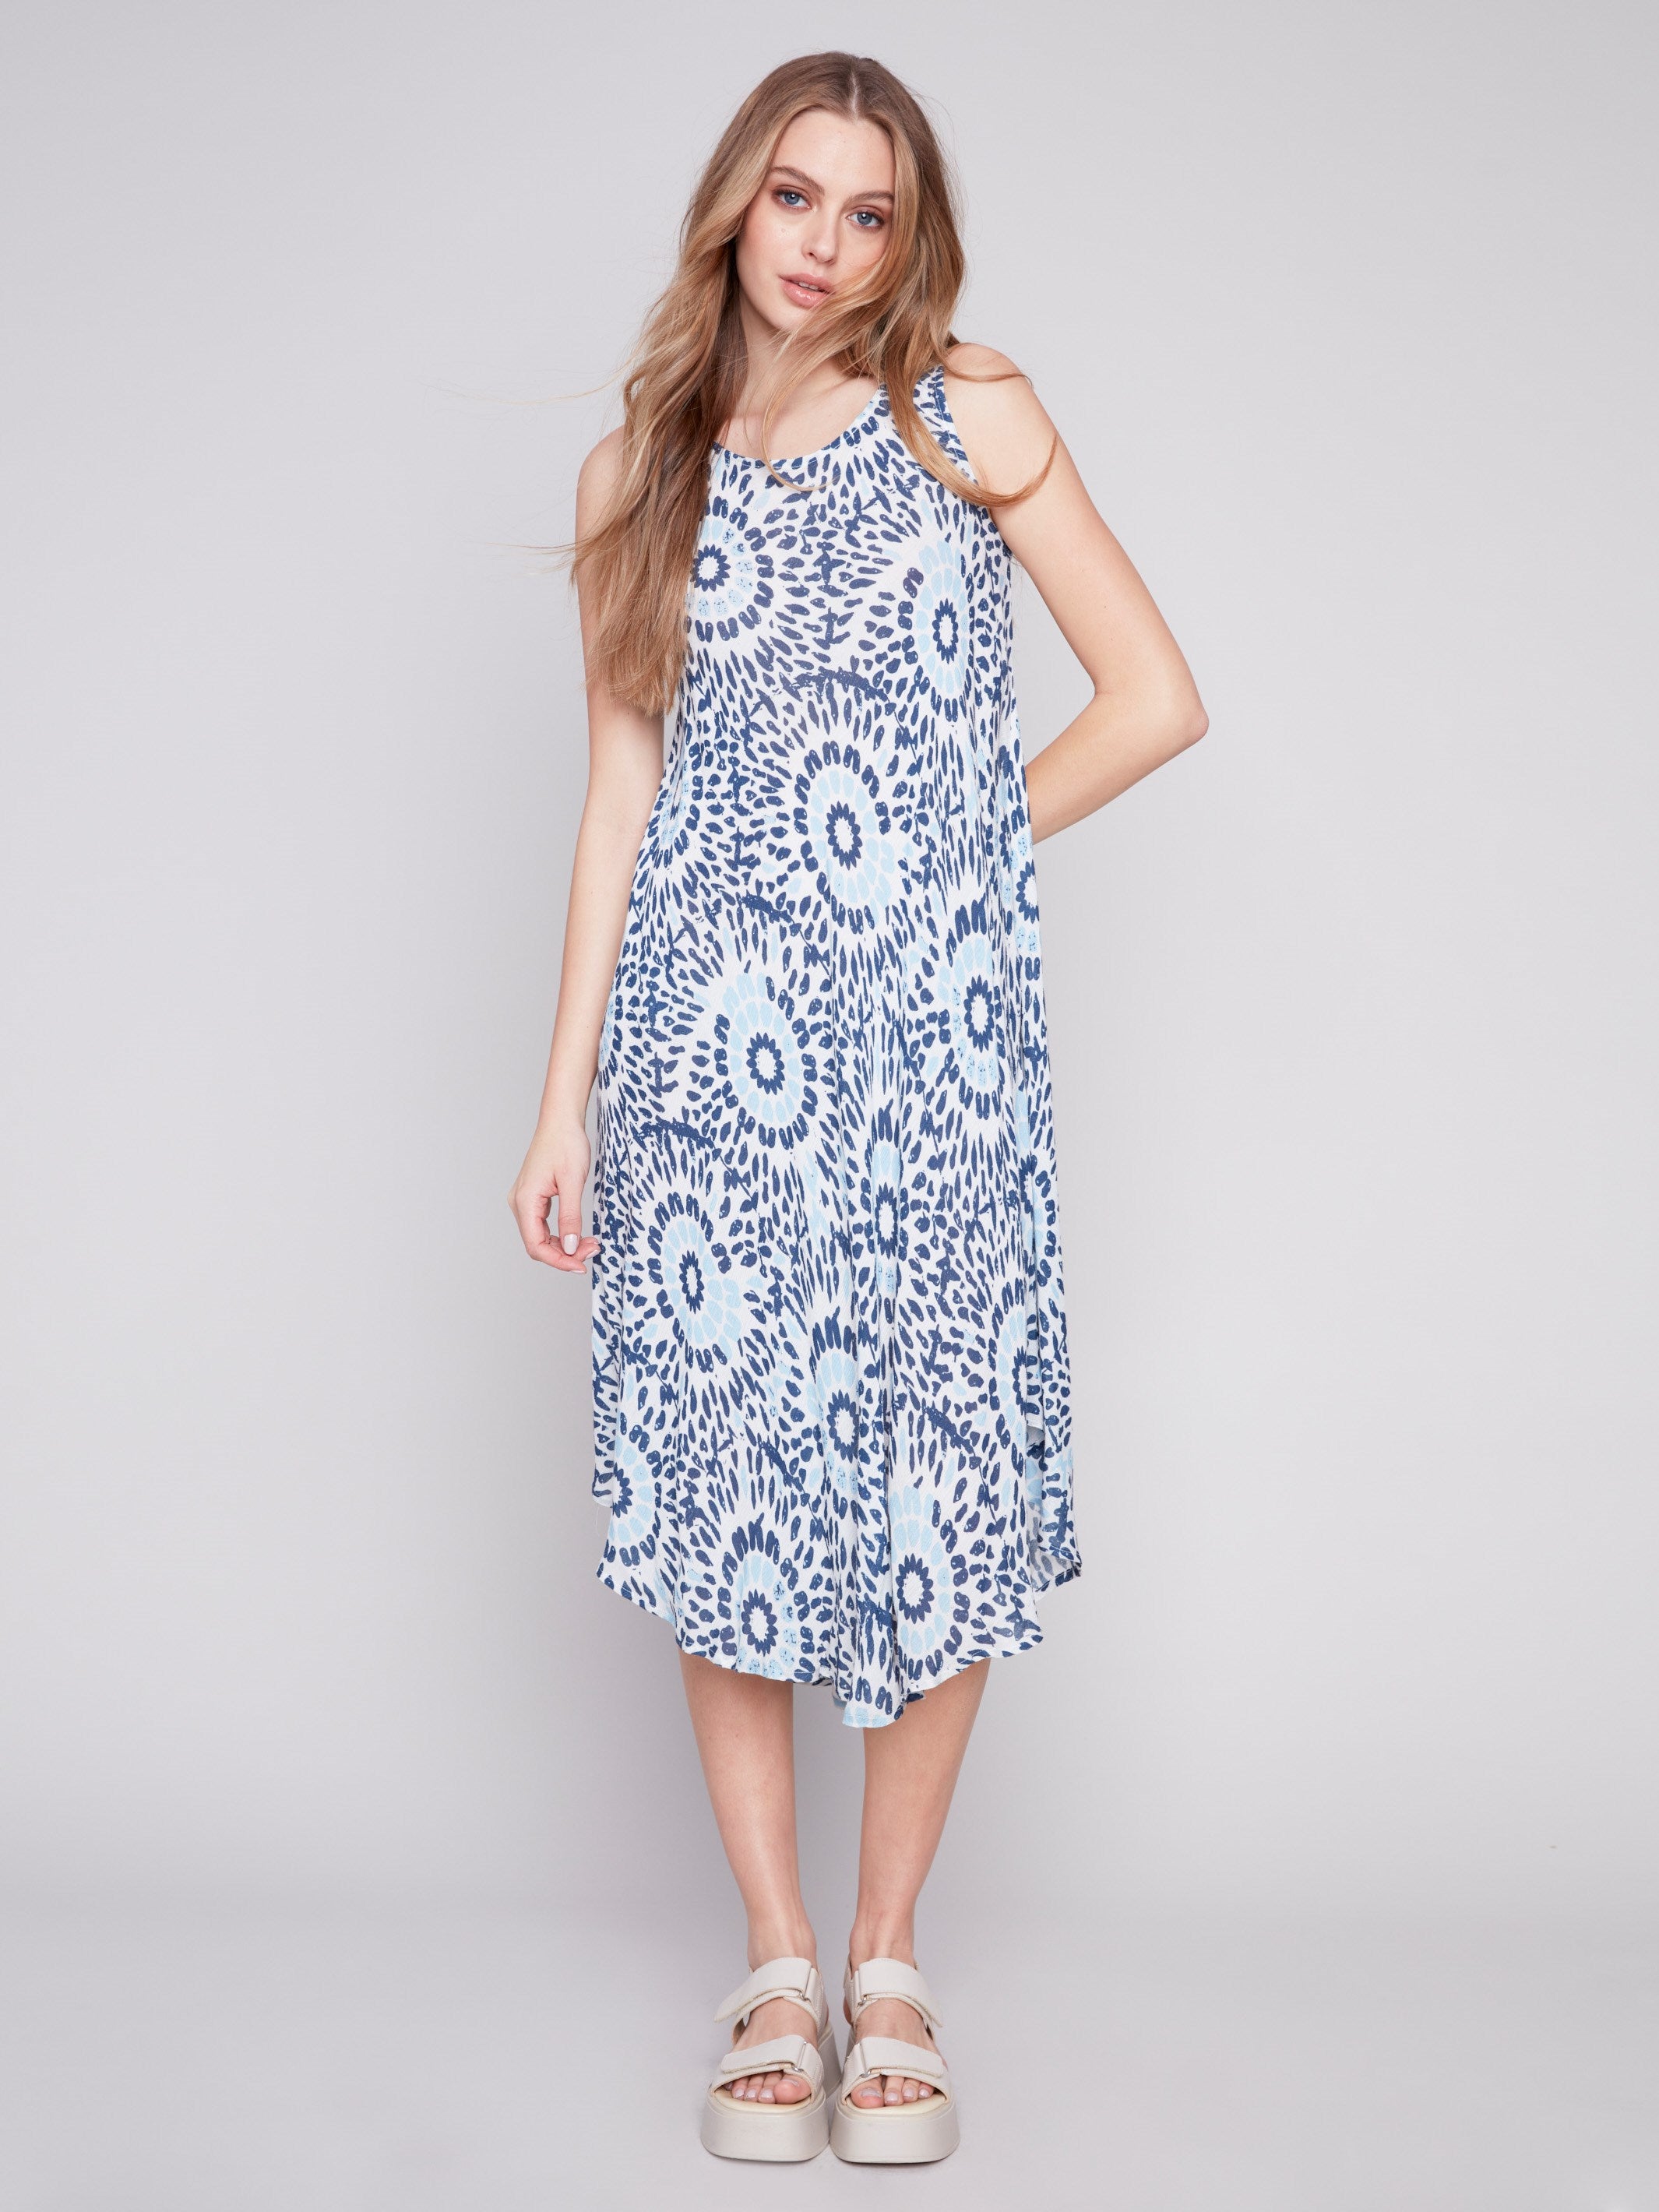 Charlie B Sleeveless Printed Rayon Dress - Sahara - Image 1